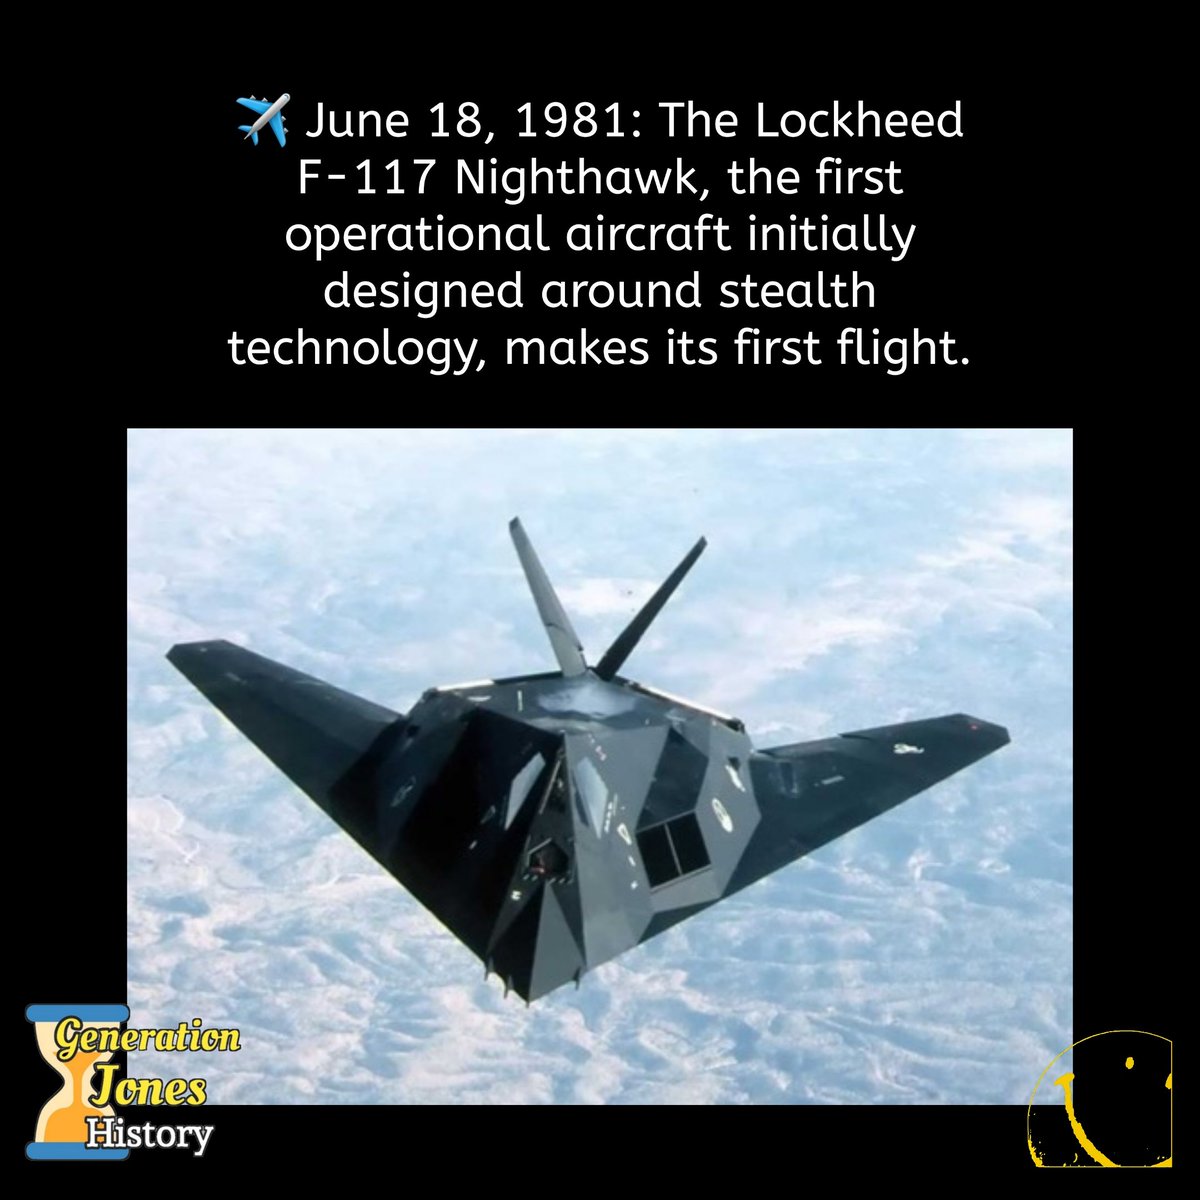 ✈️ June 18, 1981

#LockheedF117Nighthawk
#usmilitary #aviationhistory
#history #ushistory #coldwar 
#1980s #technology #generationjones #generationx #babyboom